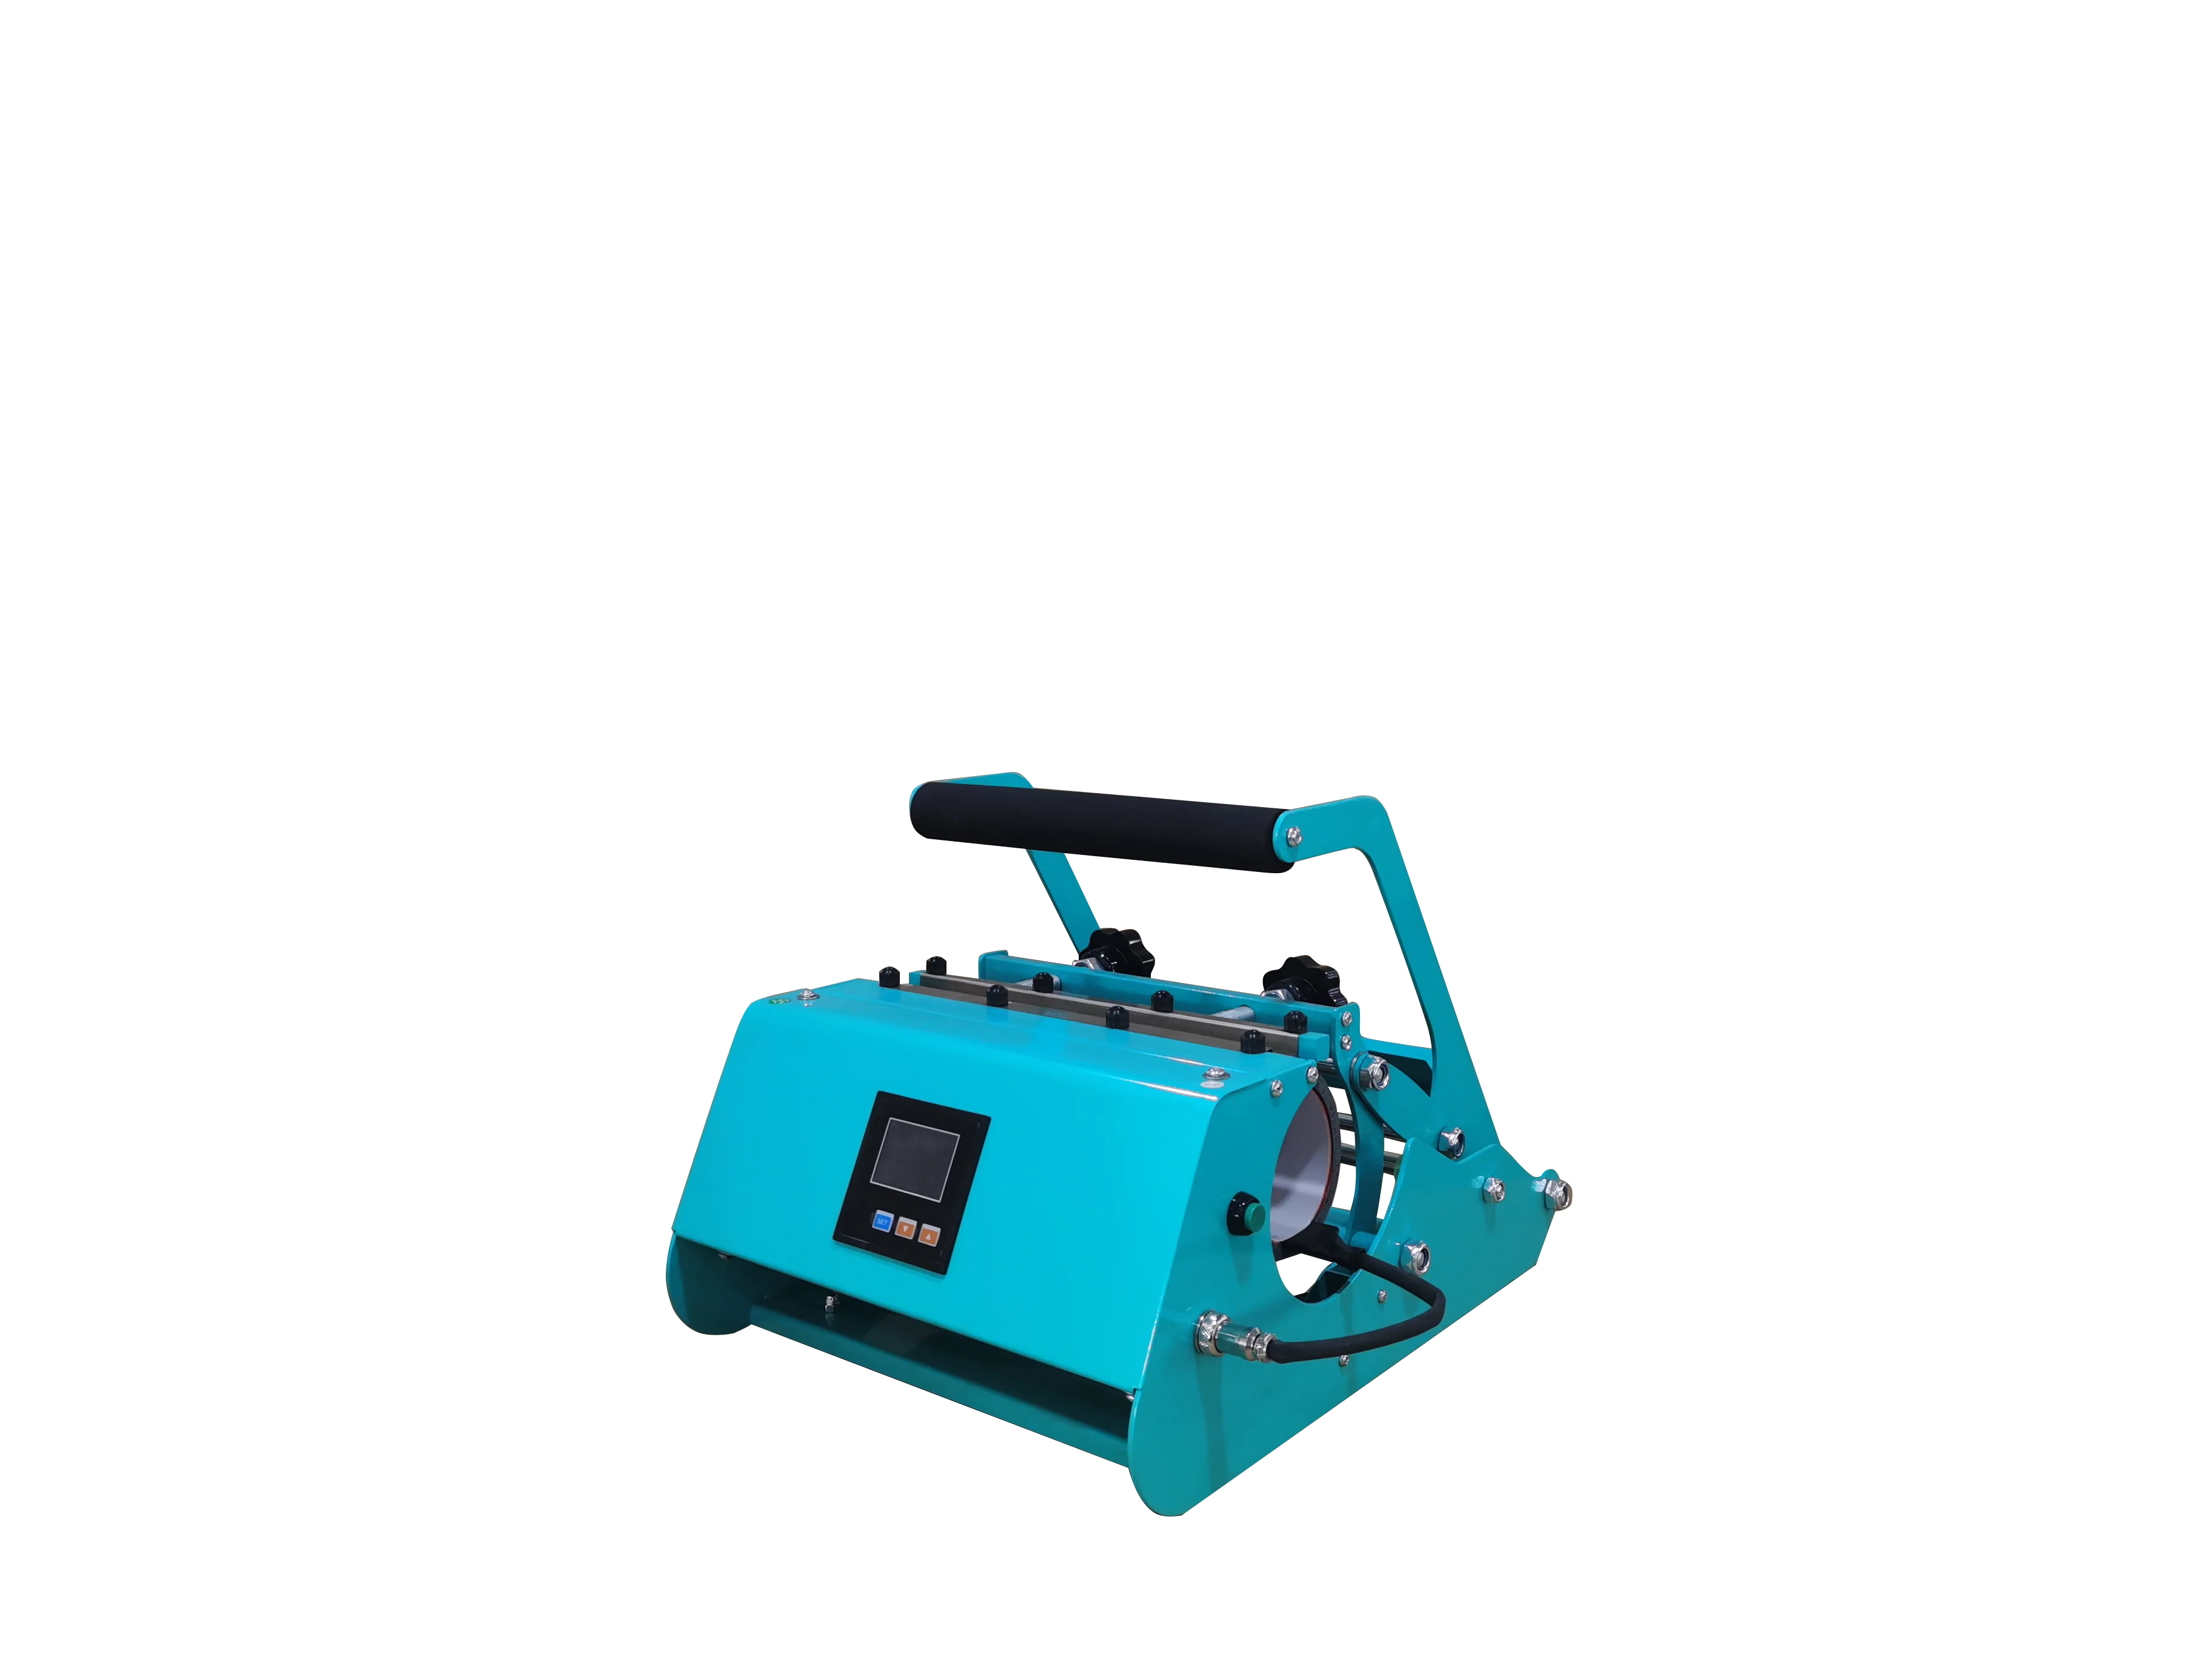 Tumbler Press Machine, Heat Press Machine for Tumbler Cup Printing CH1924 -  Colorking Heat Press Machine Co., LTD.